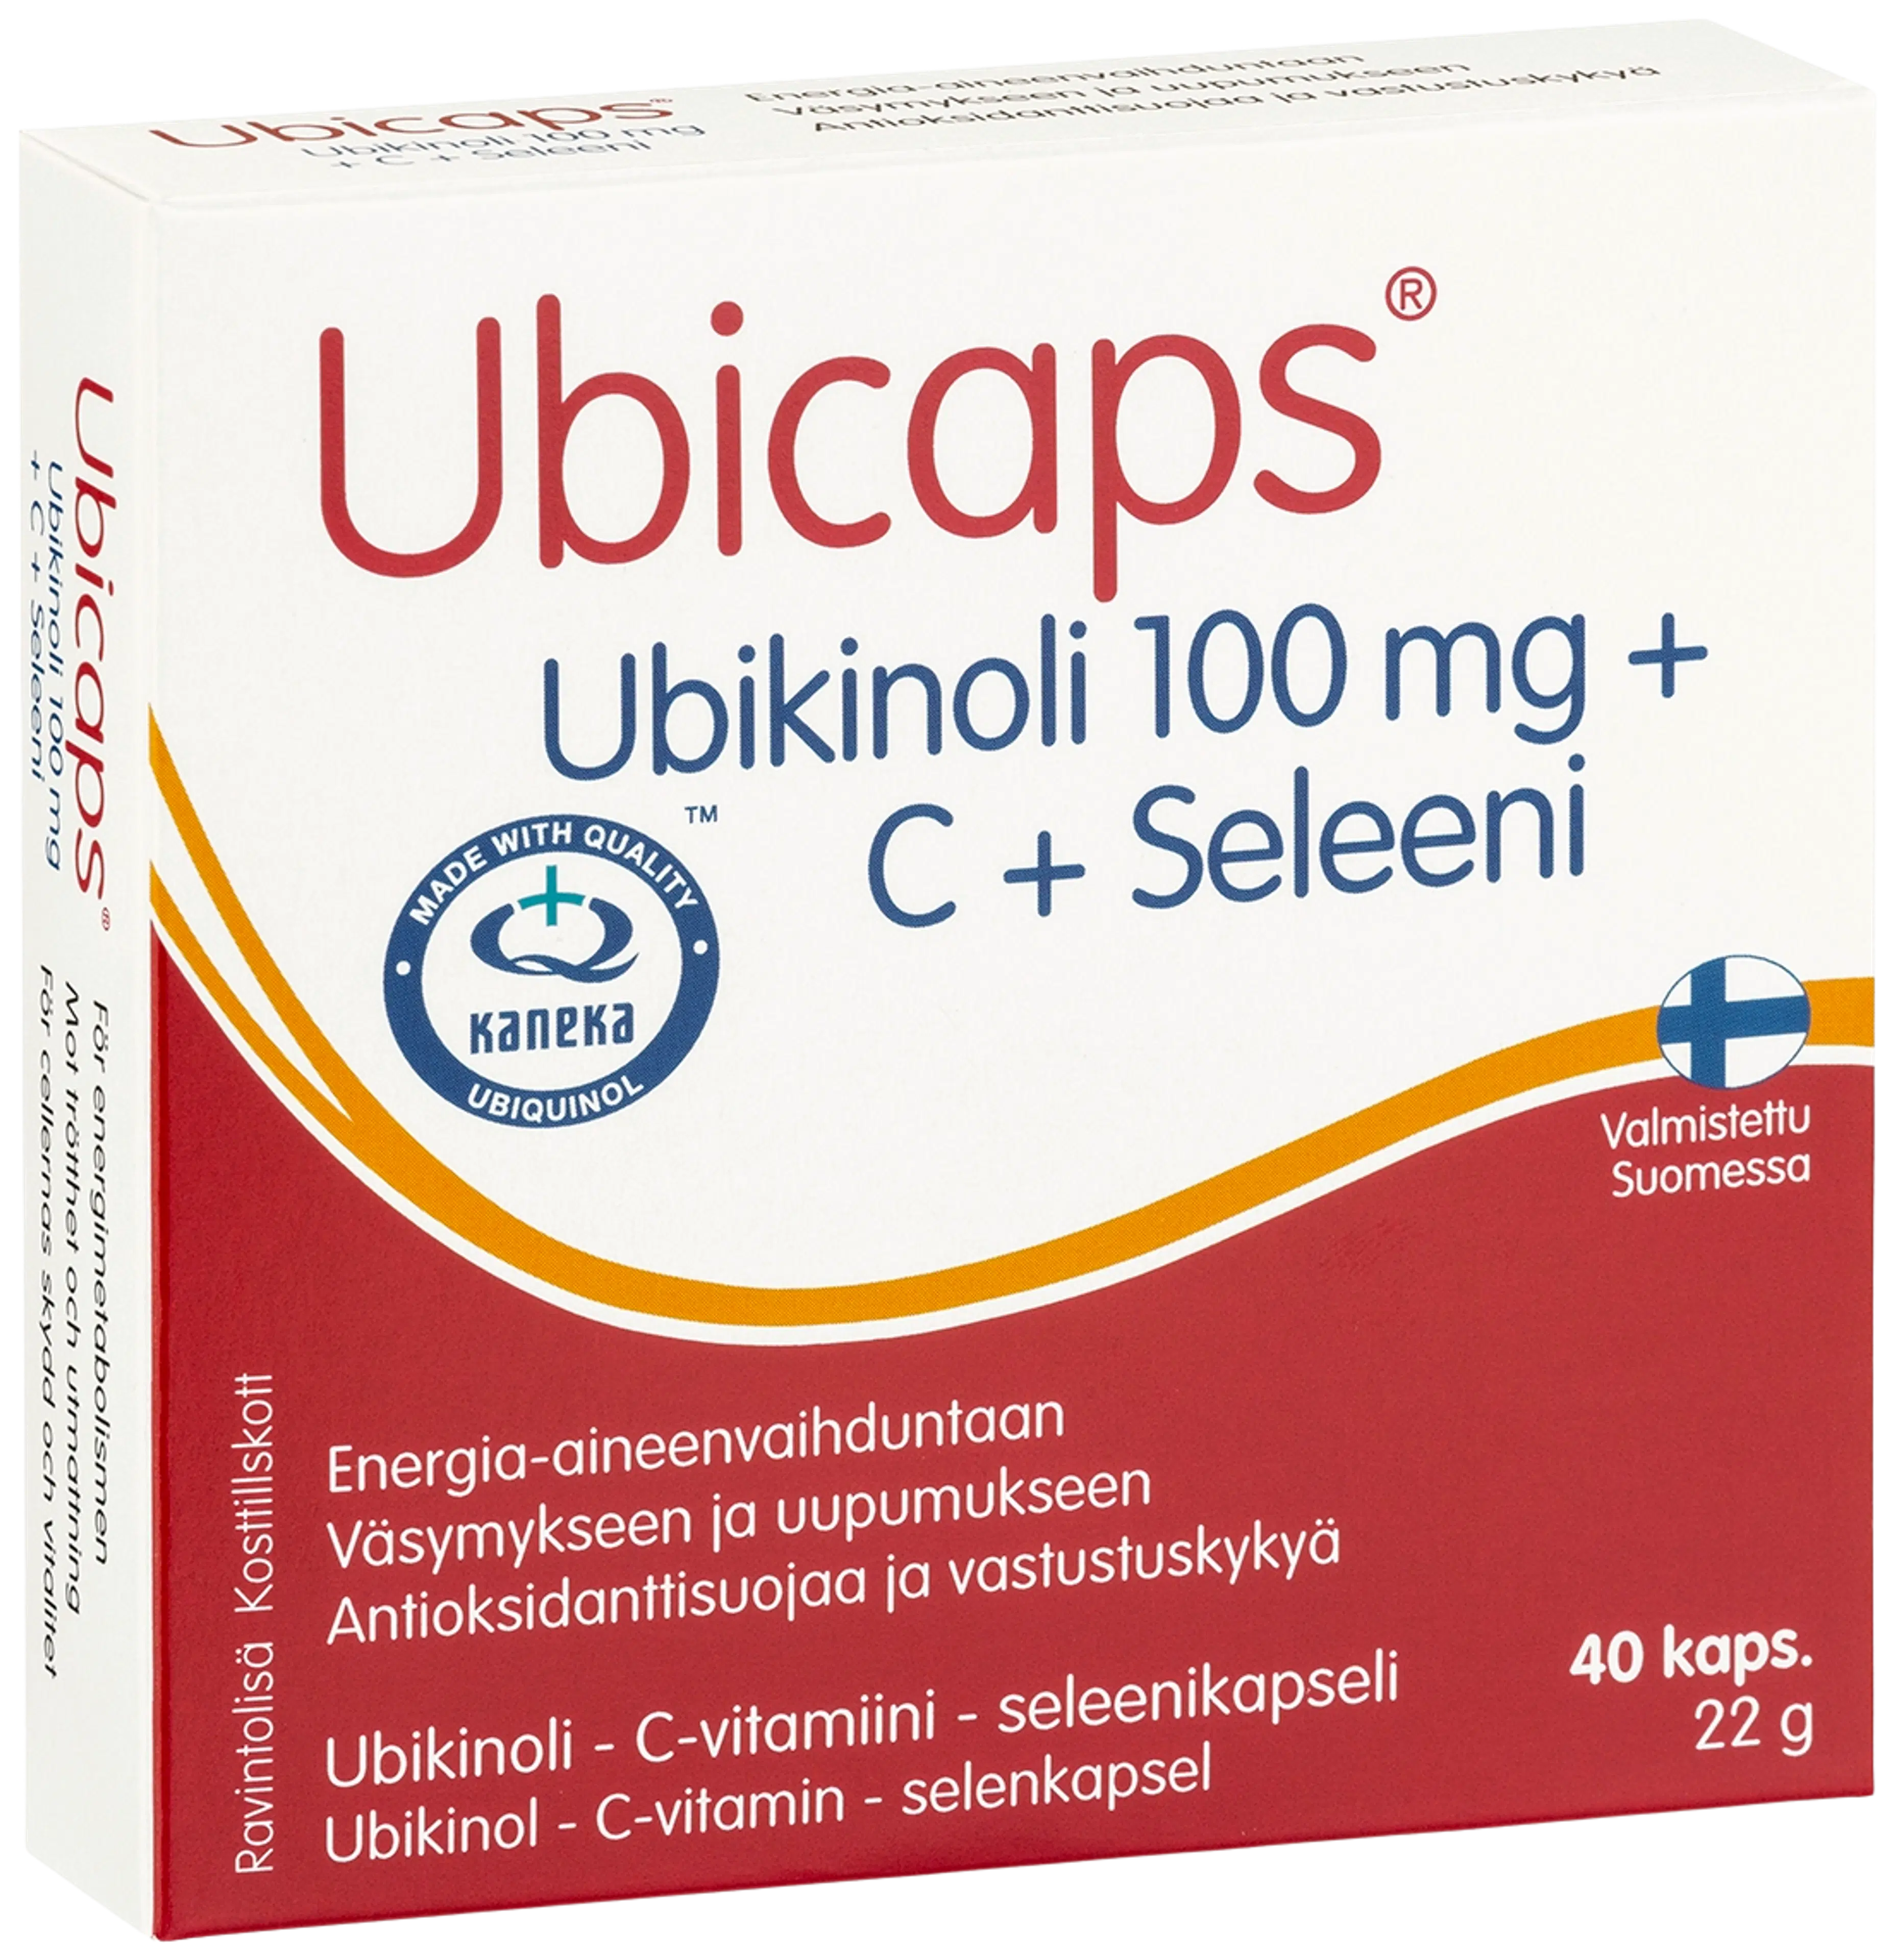 Ubicaps Ubikinoli 100 mg + C + Seleeni Ubikinoli - C-vitamiini - seleenikapseli 40 kaps